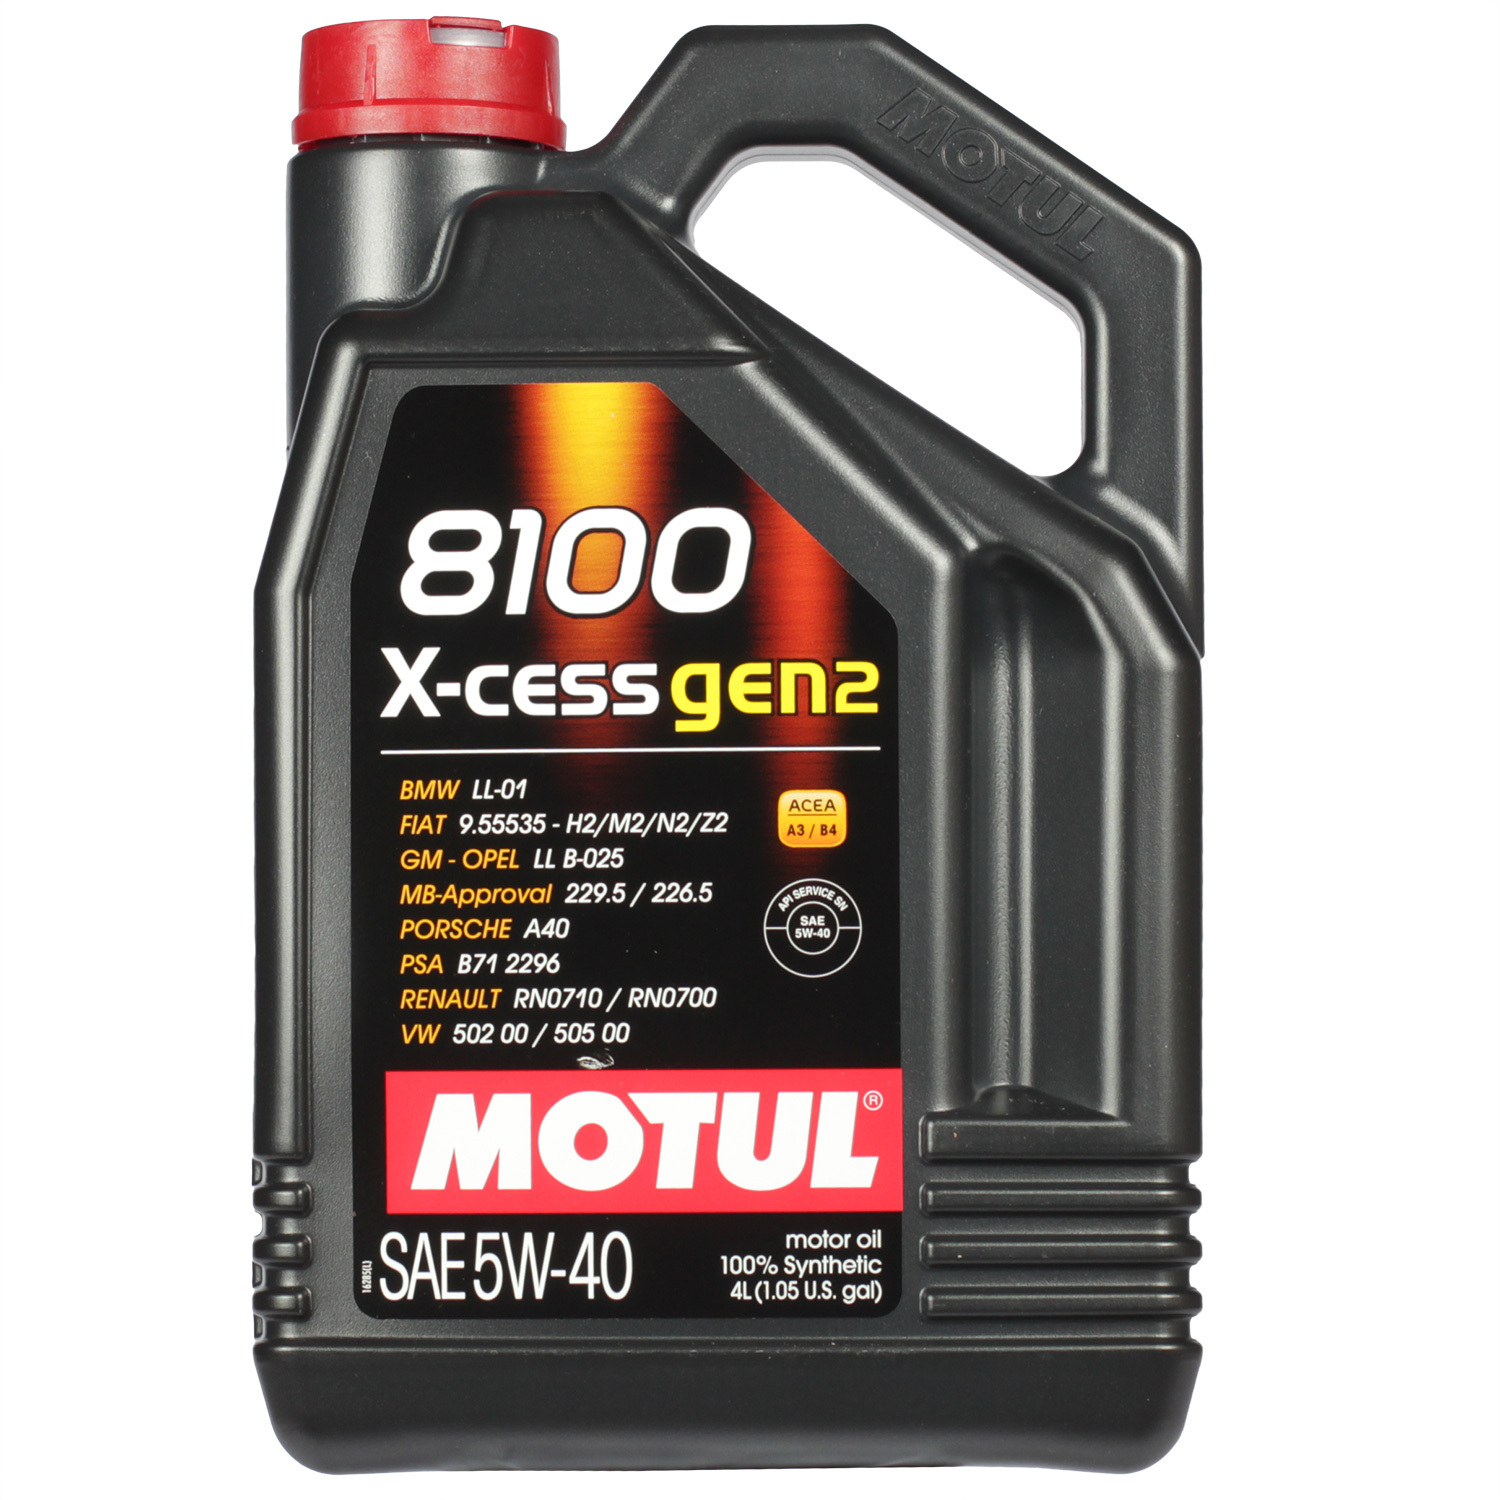 Motul Моторное масло Motul 8100 X-cess gen2 5W-40, 4 л motul моторное масло motul 8100 x clean efe 5w 30 1 л